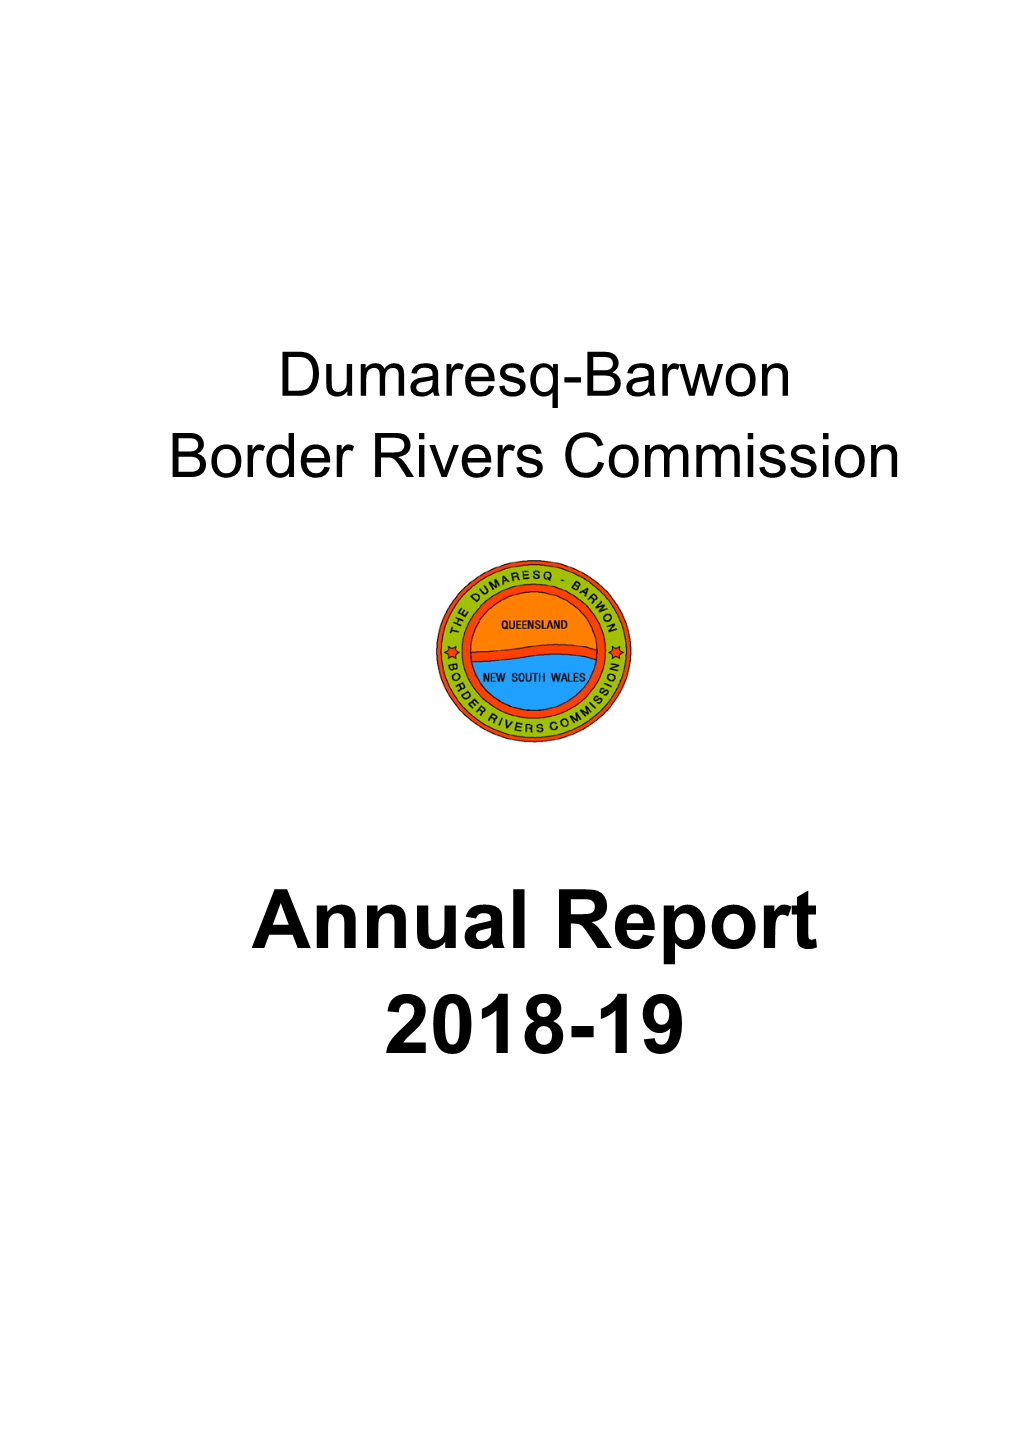 Dumaresq-Barwon Border Rivers Commission